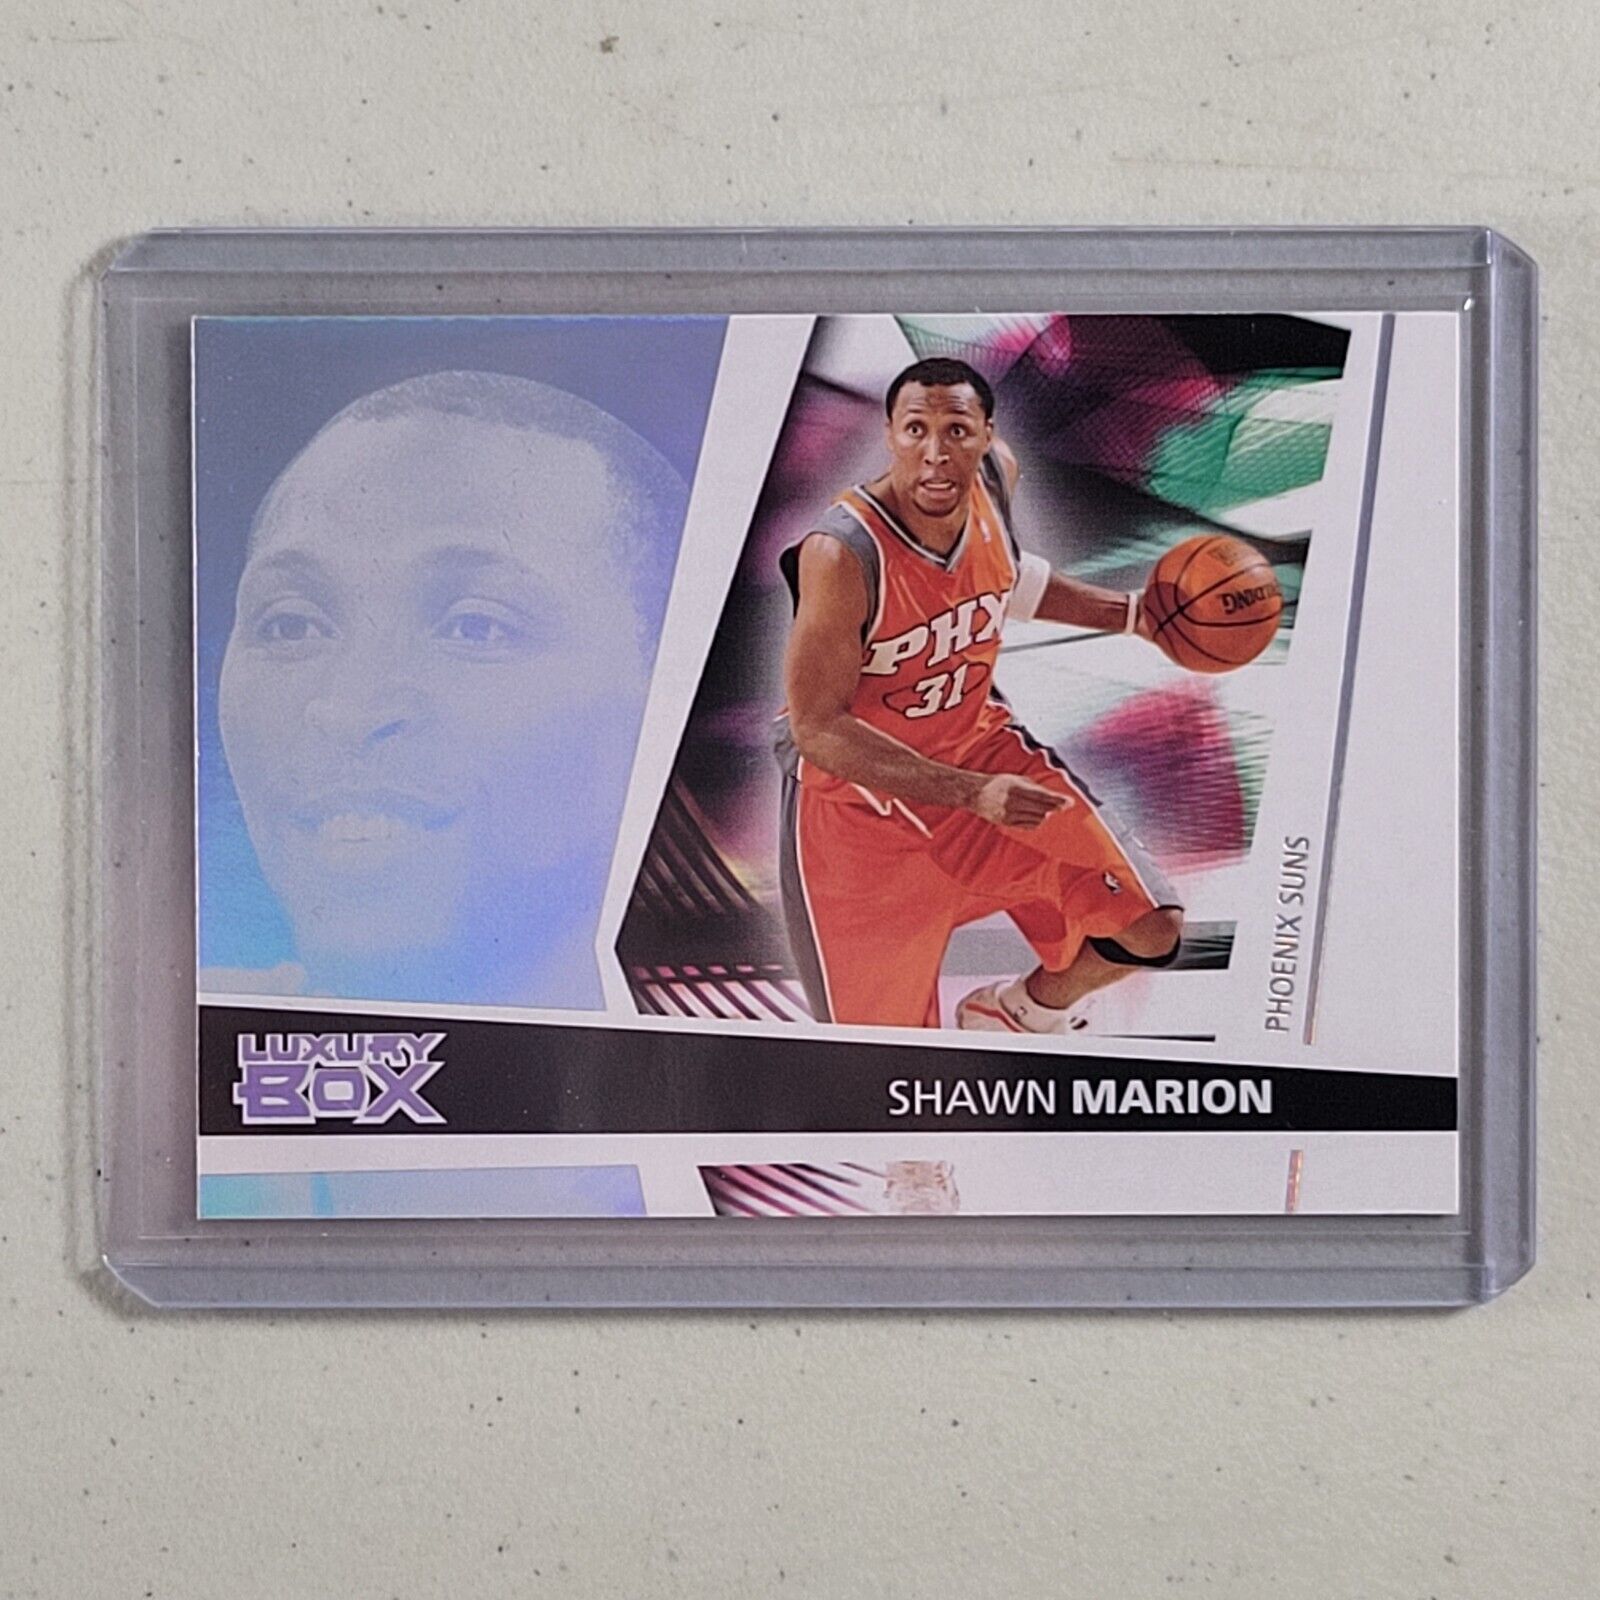 Shawn Marion 2005-2006 Topps Luxury Box #25 Phoenix Suns NBA Basketball Card - $4.46